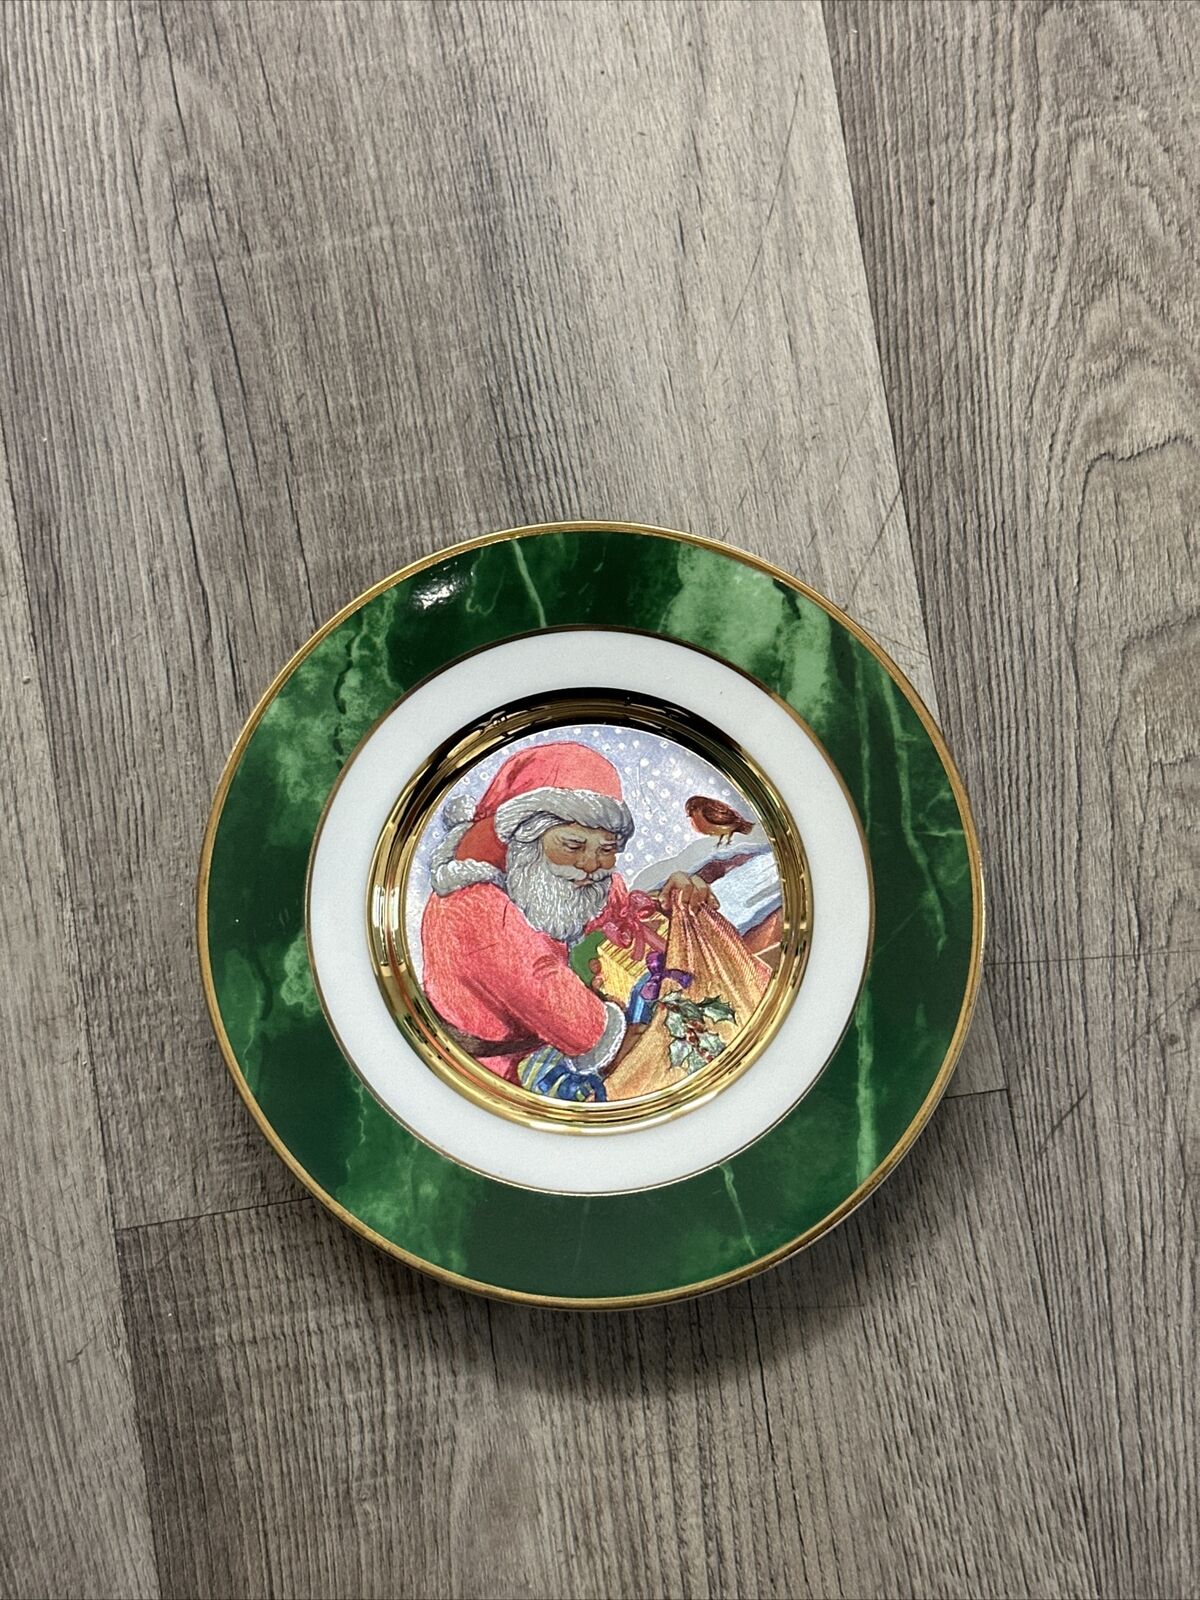 Vintage Dufex Art 24k Gold Trim Christmas plate santa with bag